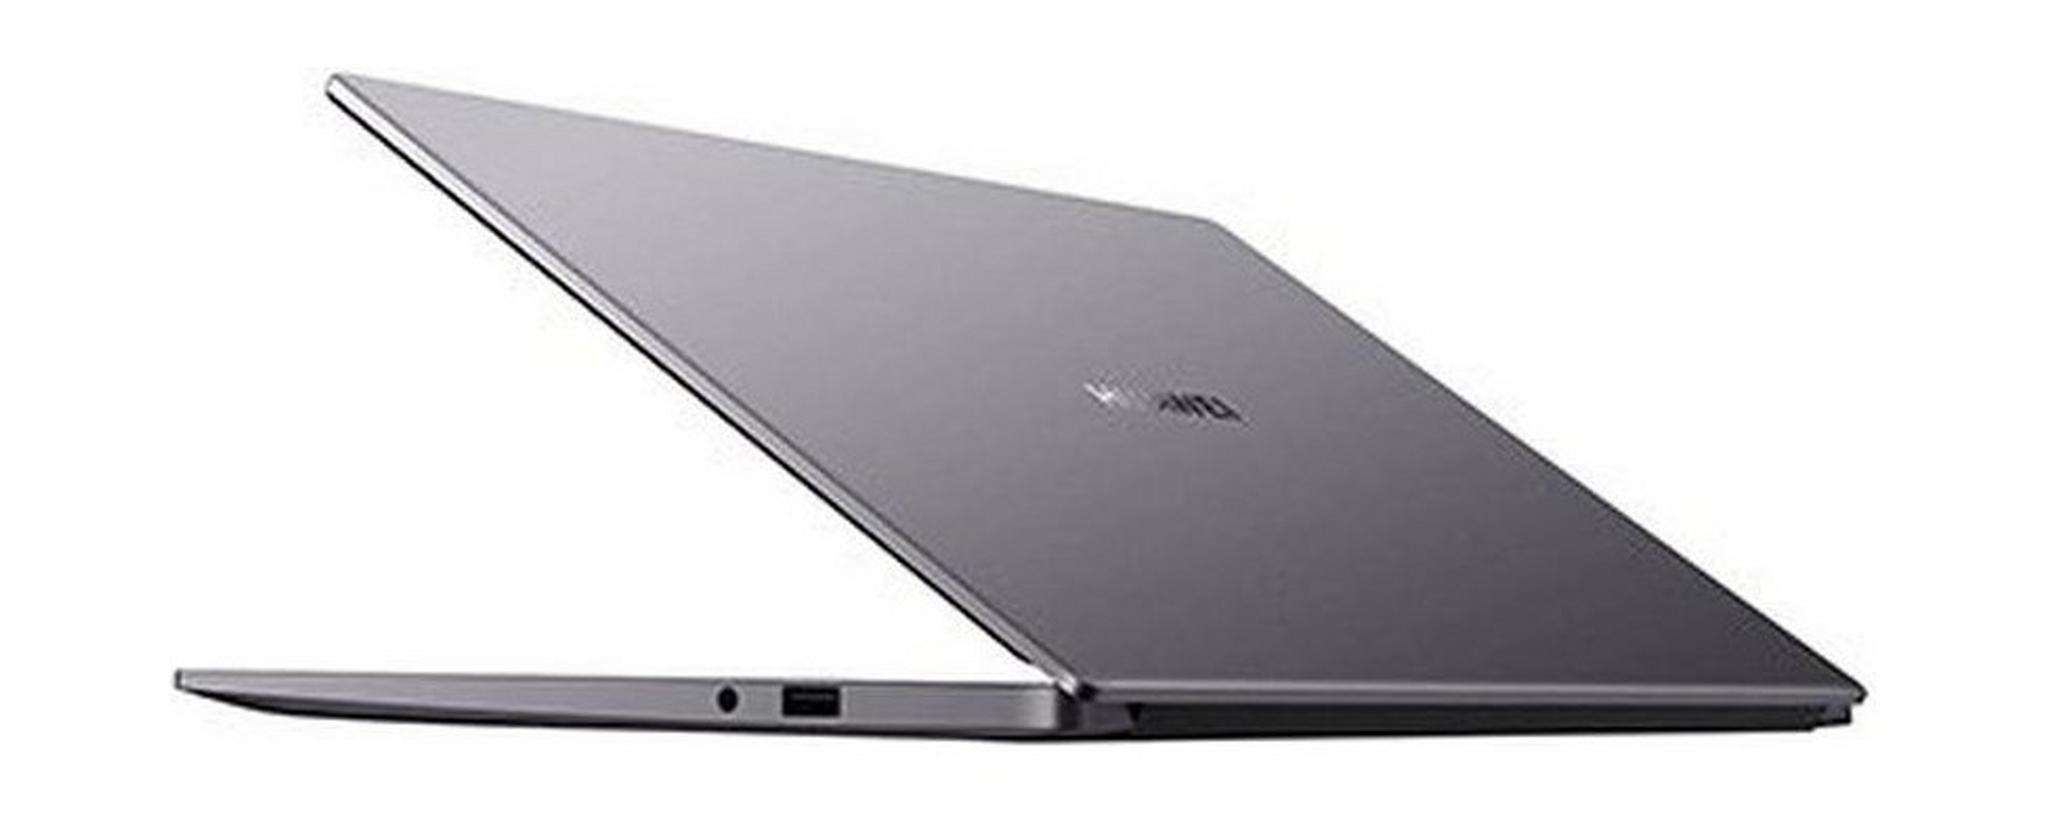 Huawei Matebook D Core i7 16GB RAM 512 SSD 14-inch Laptop - Grey